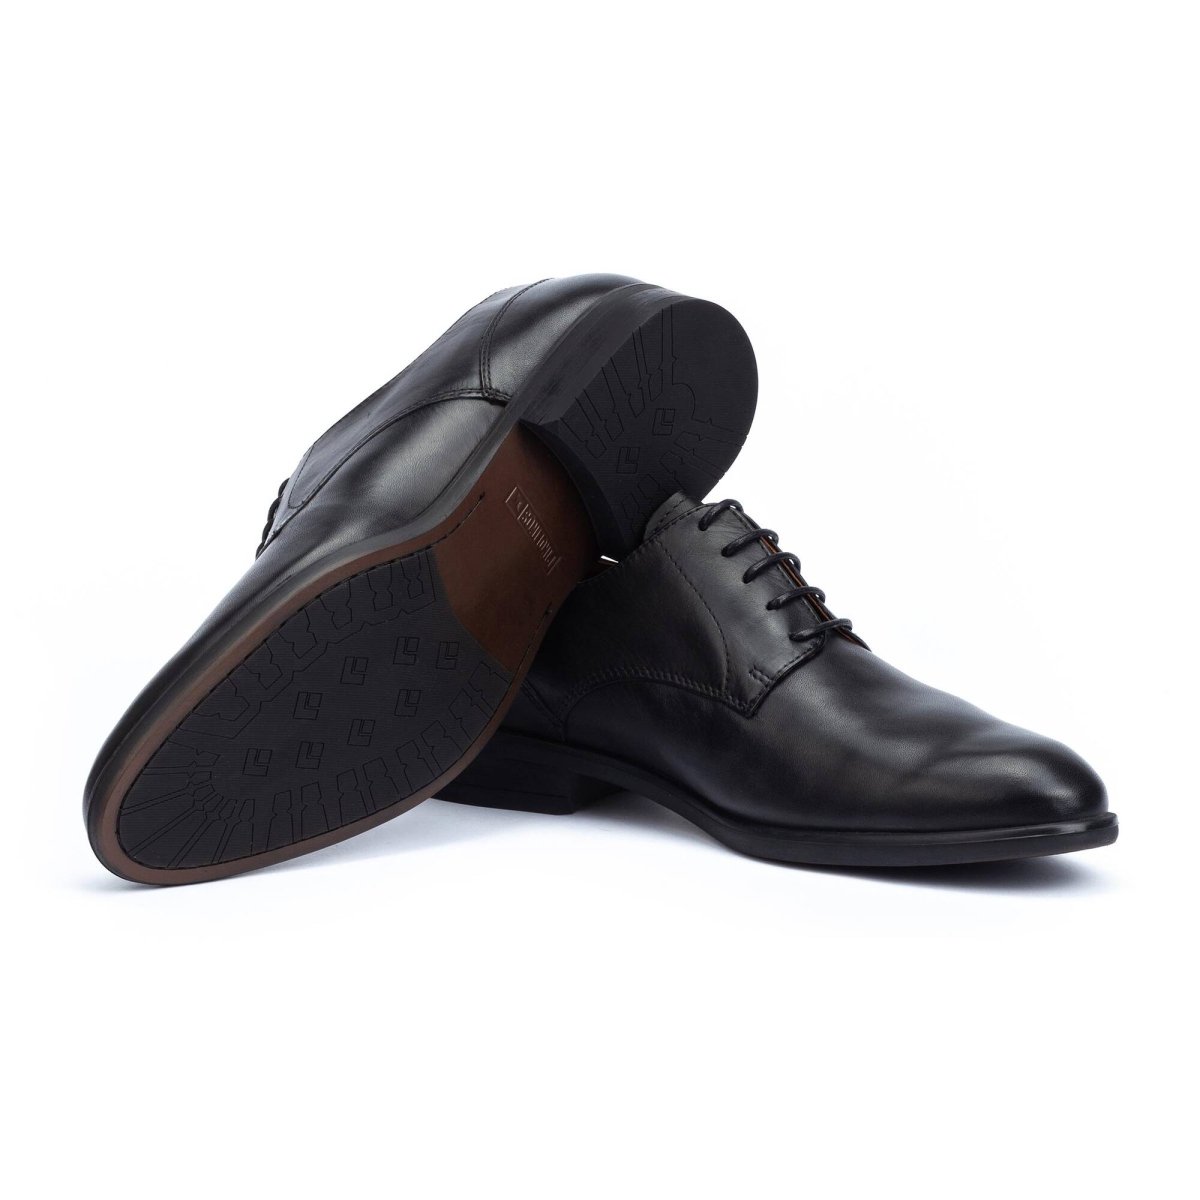 PIKOLINOS BRISTOL M7J-4187 MEN'S LACE-UP SHOES IN BLACK - TLW Shoes